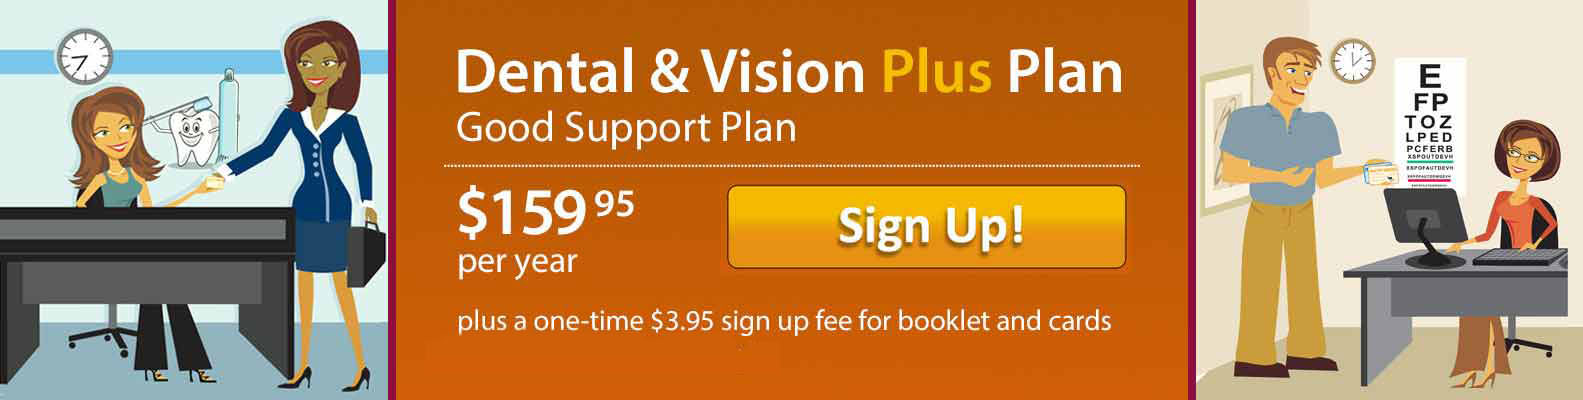 Dental & Vision Plus Plan for $159.95